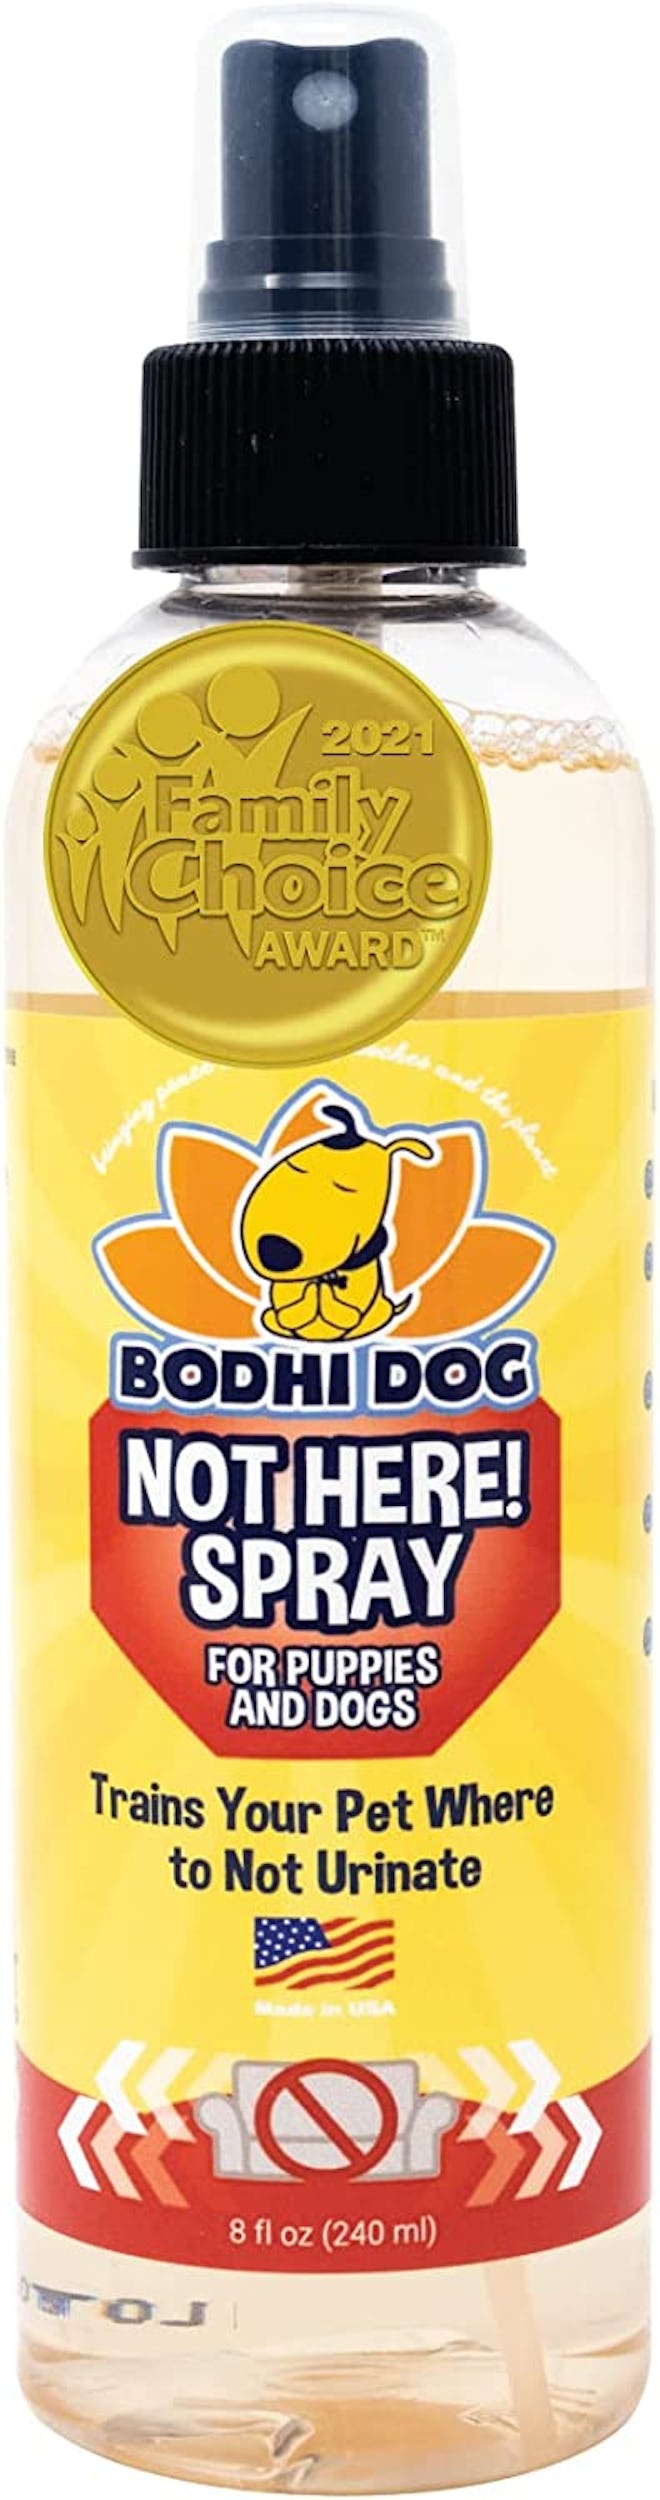 Bodhi Dog Not Here! Urine Training Corrector Spray 